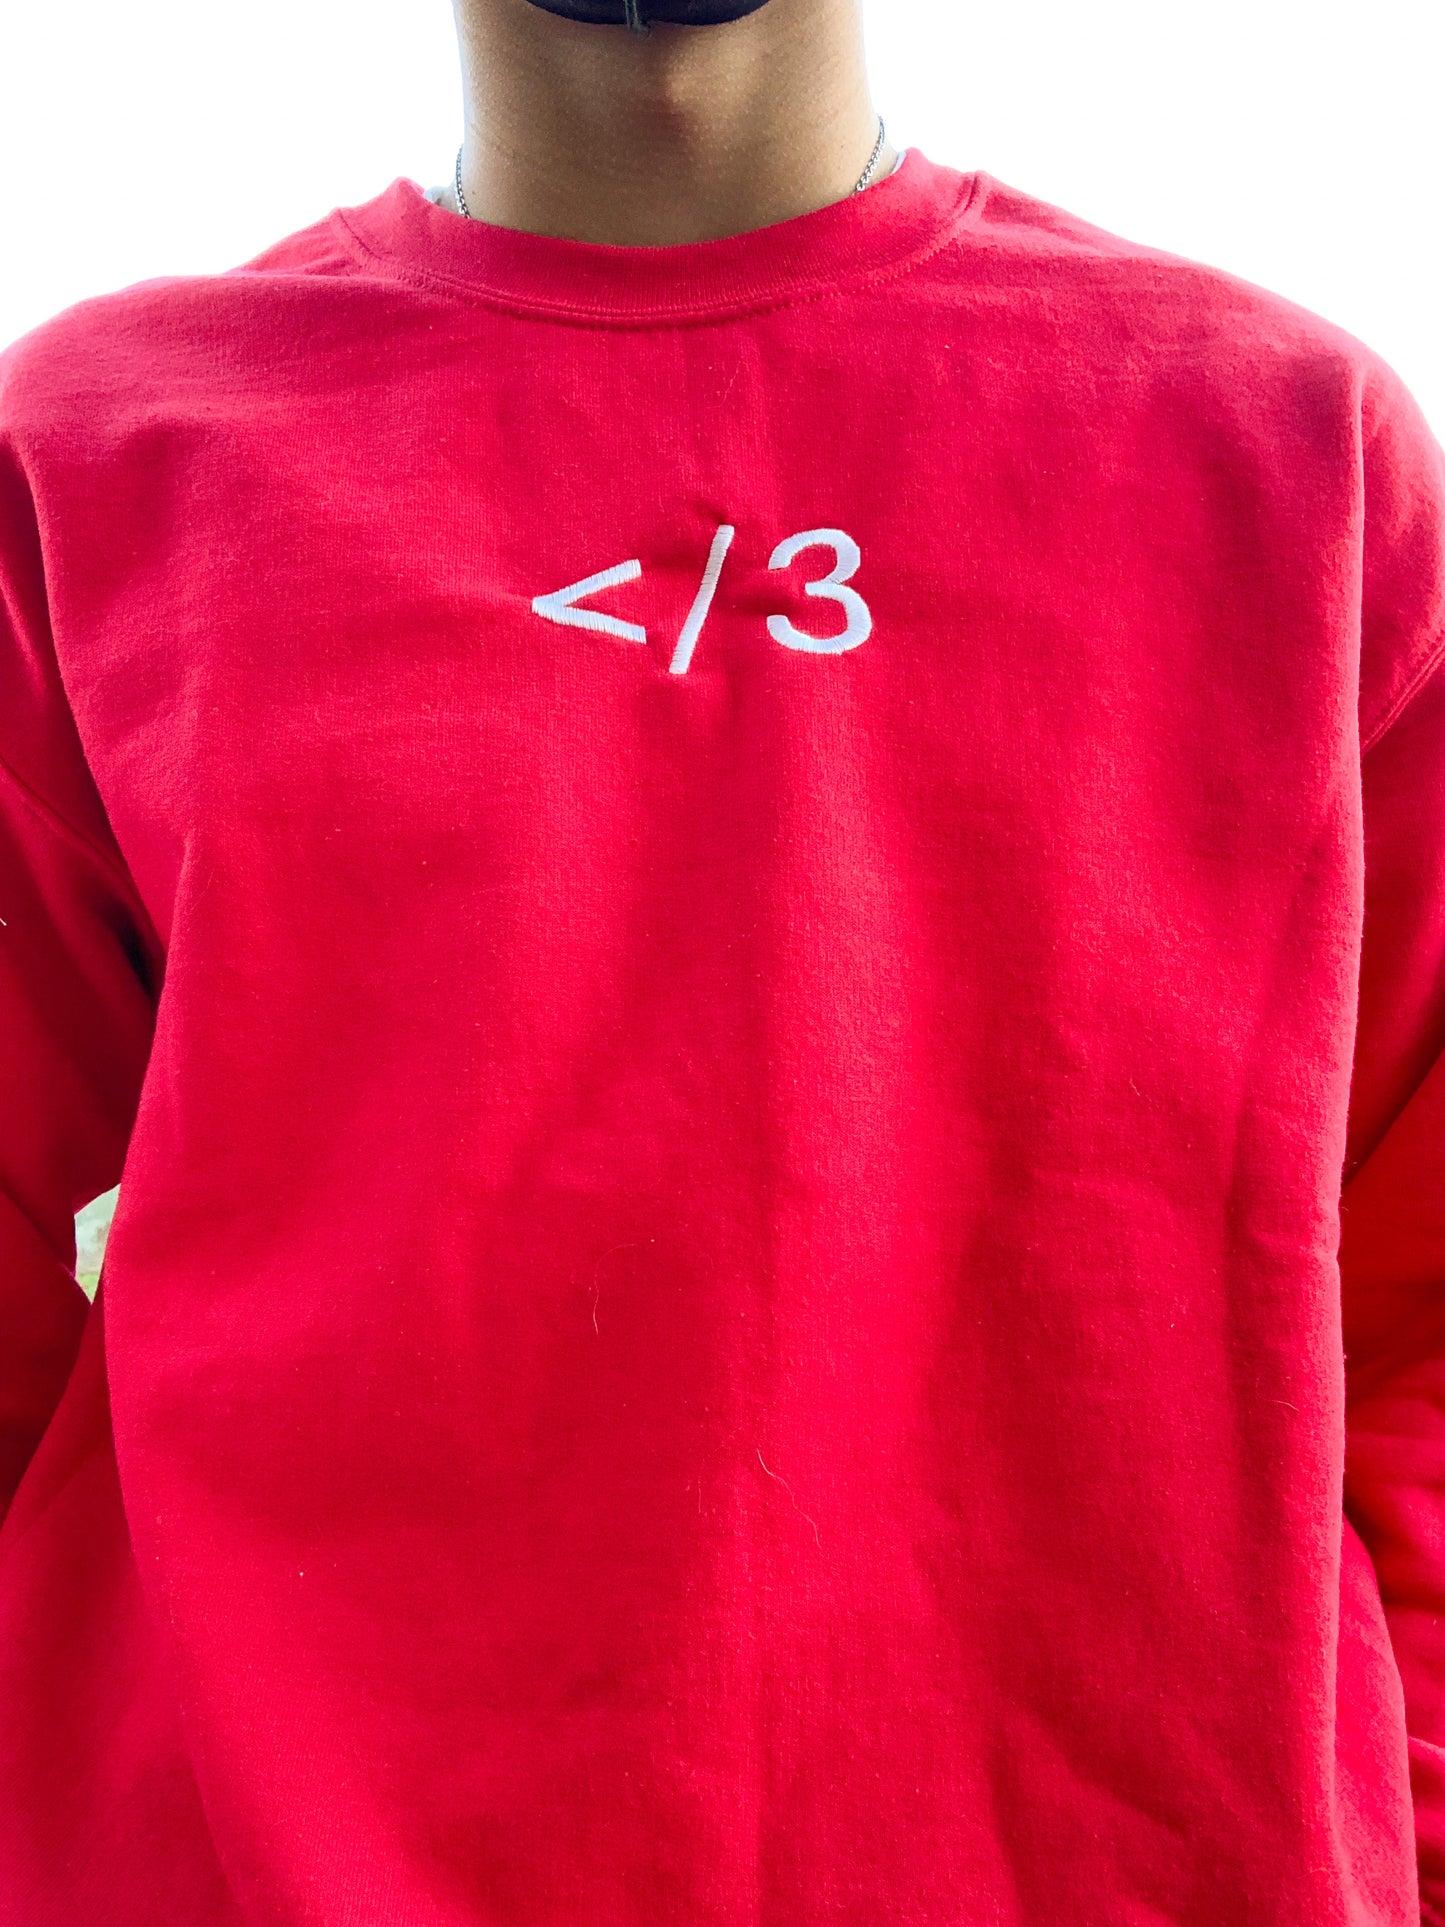 Broken Heart </3 Red Embroidered Singular Sweatshirt